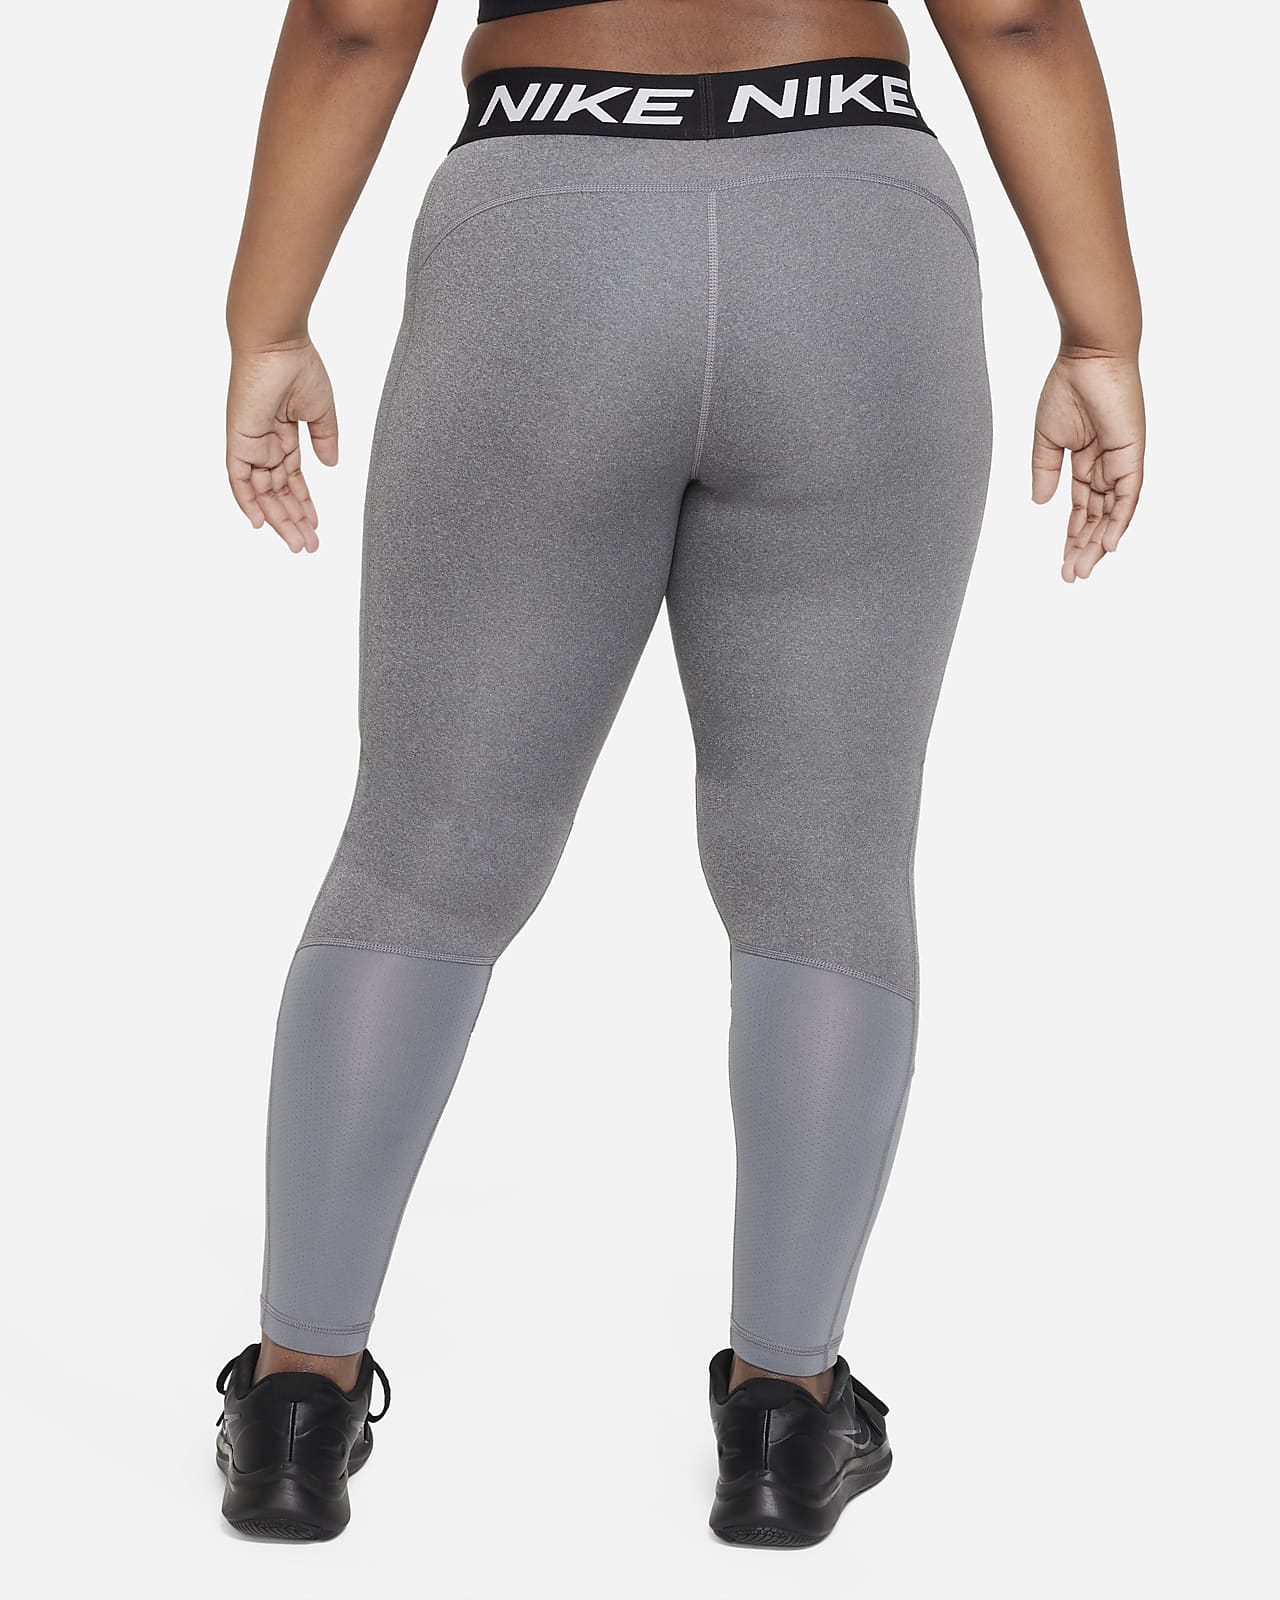 Nike Pro Dri Fit Youth Girls Grey Capri Tights 819608 063 Size